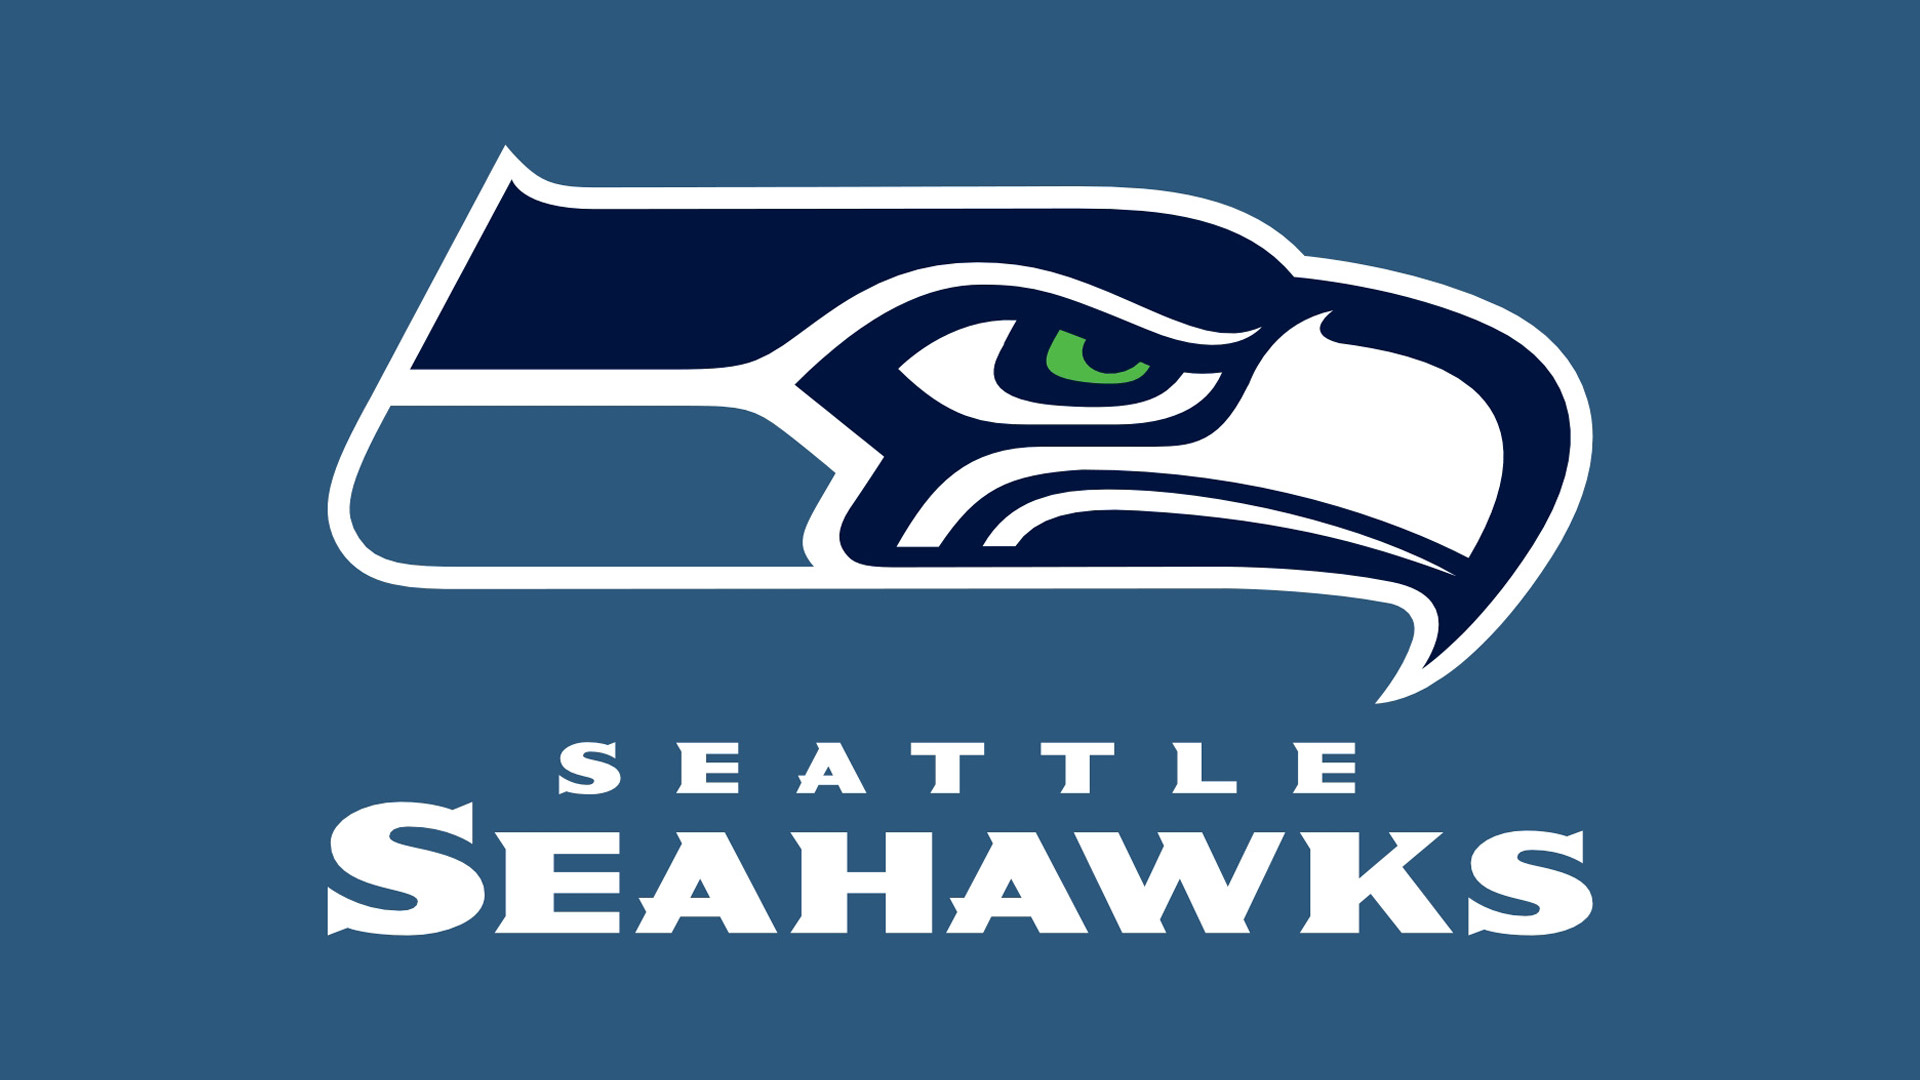  Resolution Words Seattle Seahawks Logos wallpapers HD free   148263